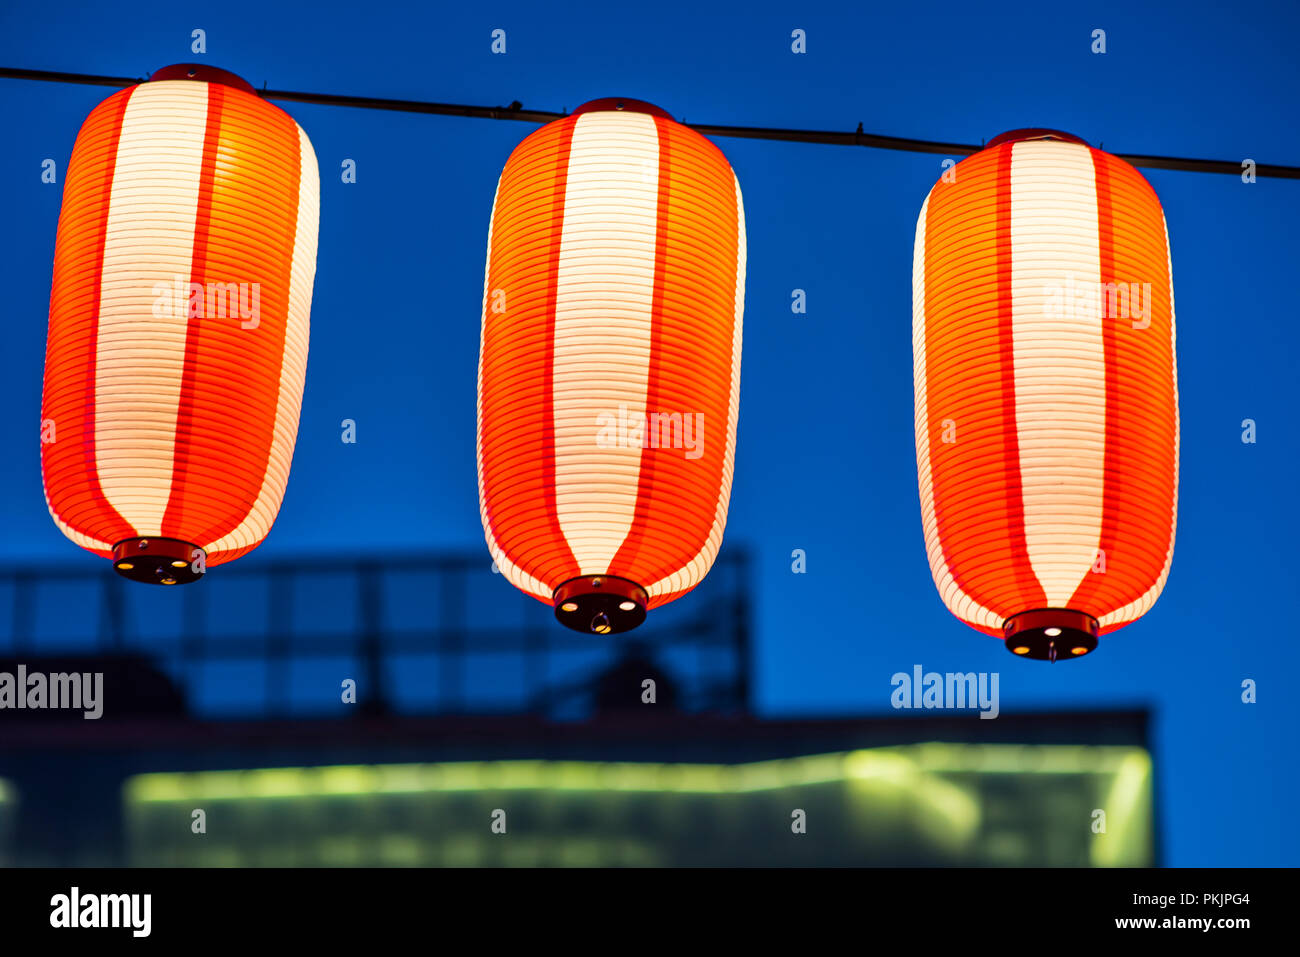 Paper Lantern orange color decoratiion at Chinatown closed up night lignt background Stock Photo